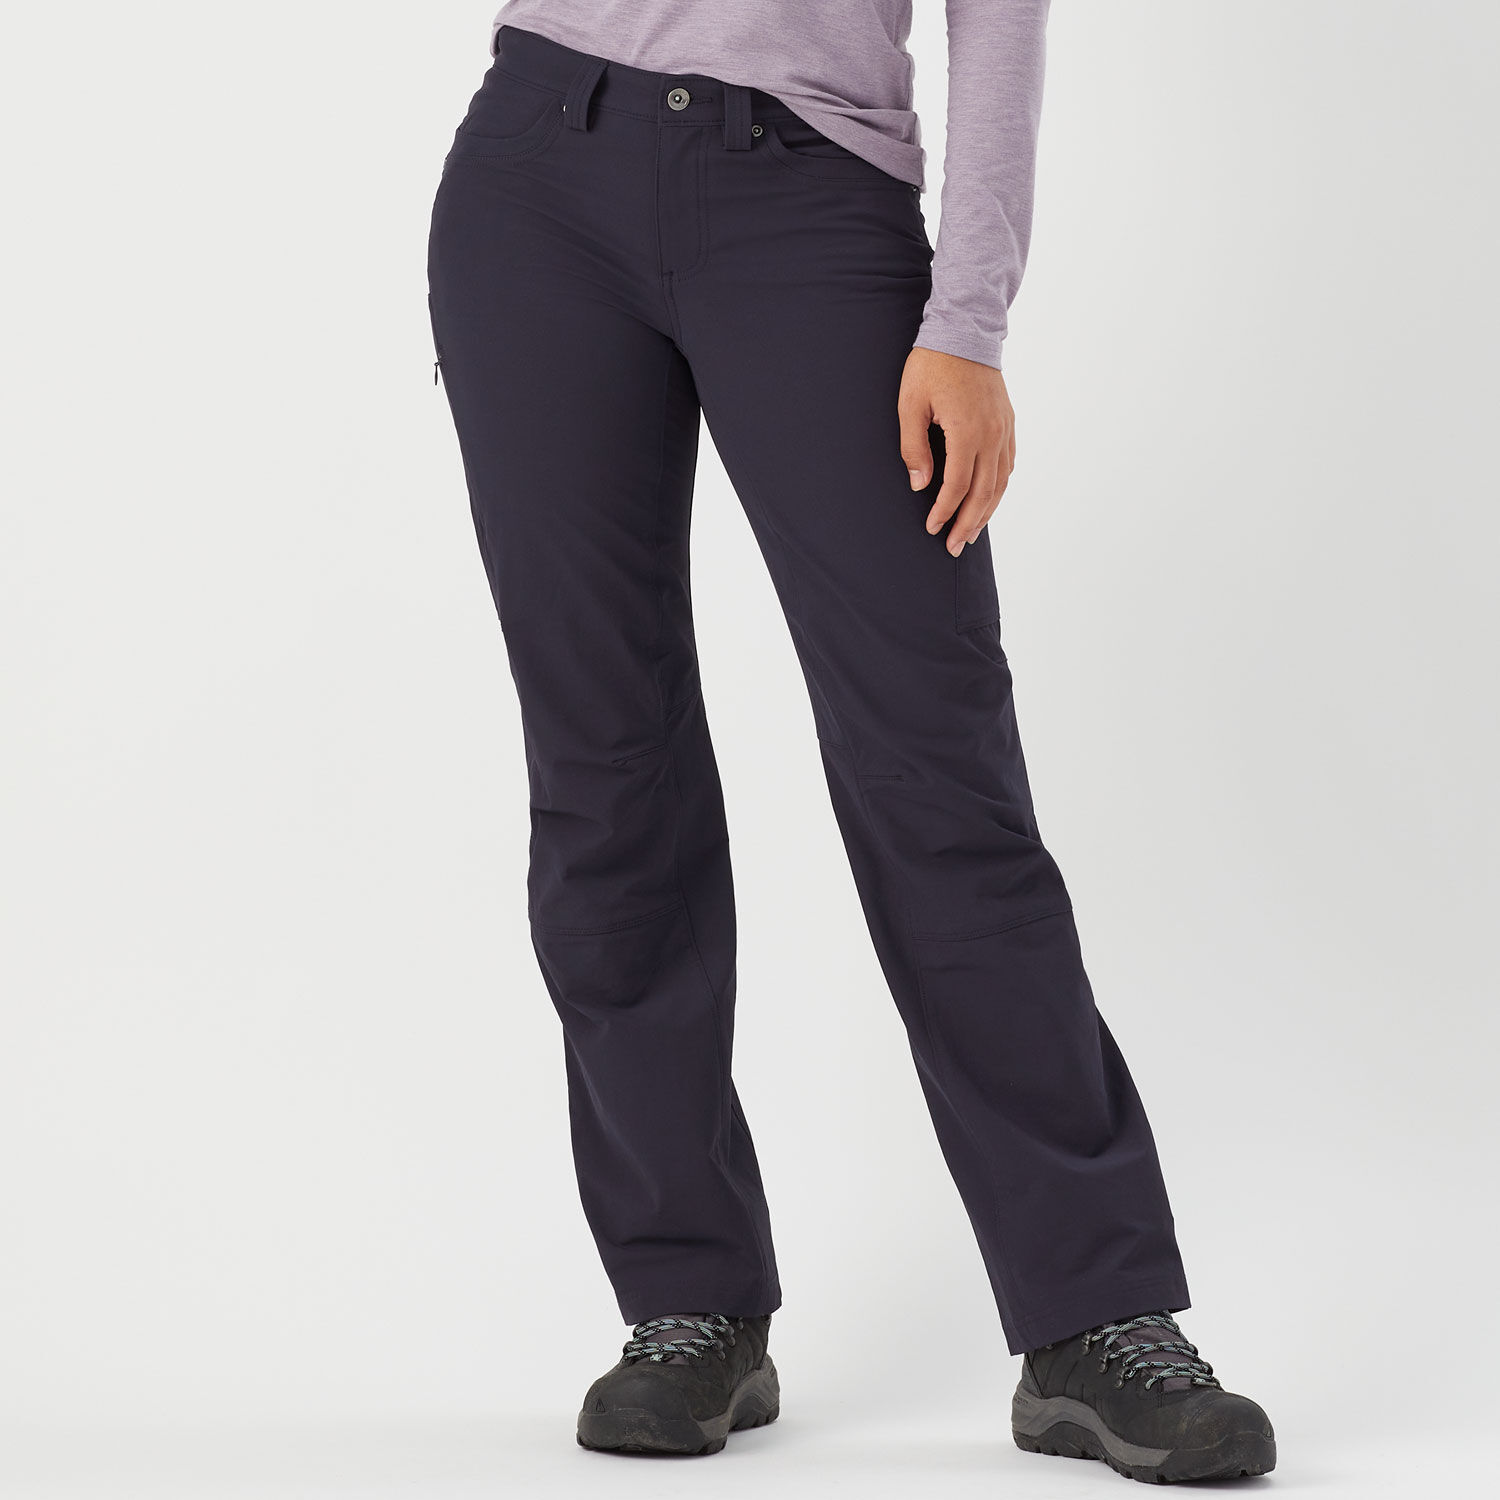 Cremieux Men's Work Dress Pants 33x30 Comfort Stretch Thompson Tan Brown |  eBay